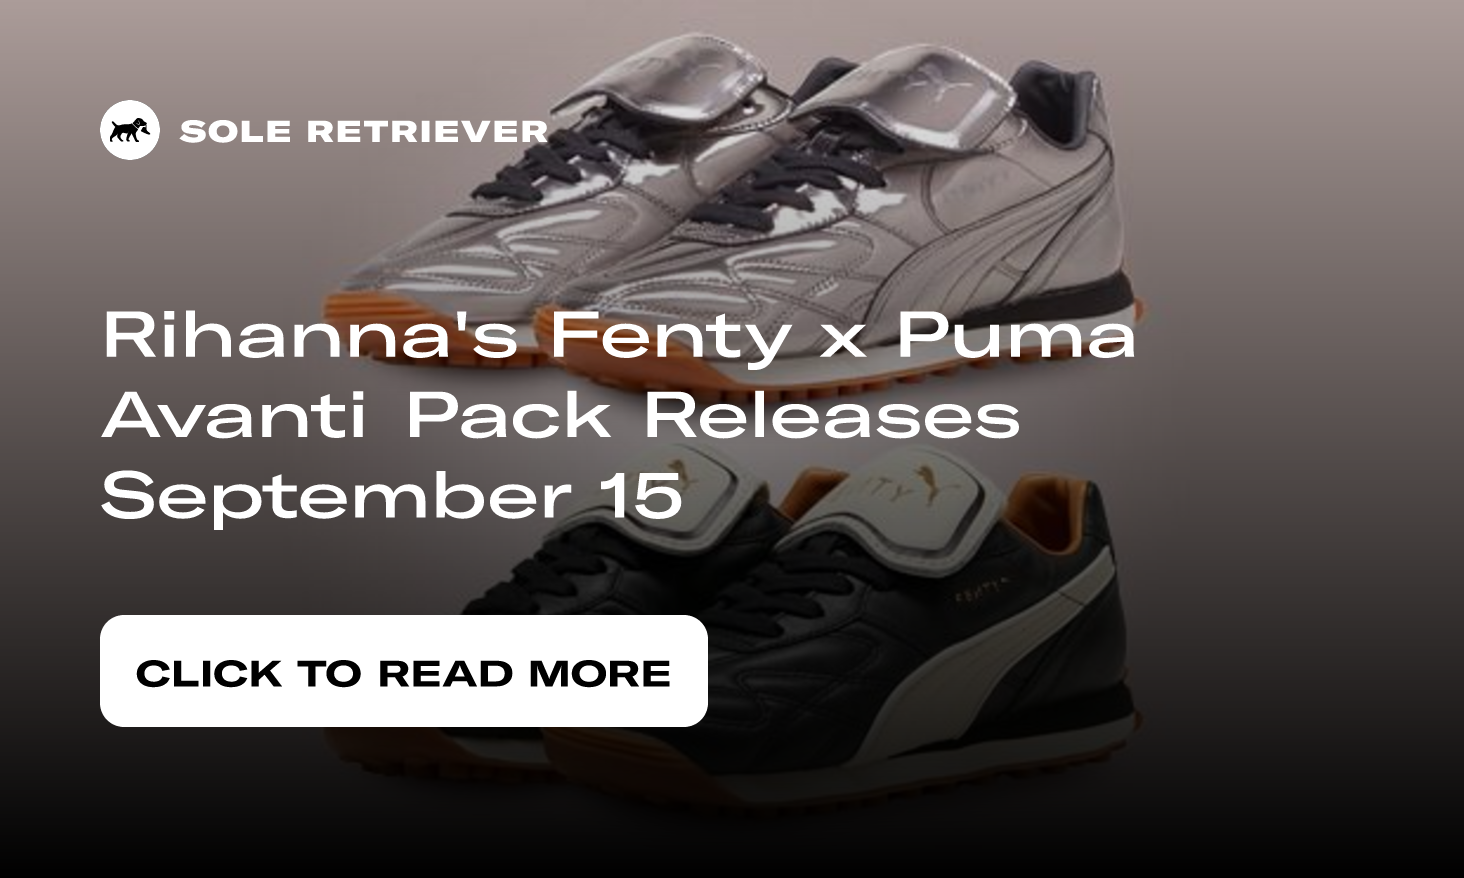 FENTY x PUMA is officially back: Rihanna launches The Avanti